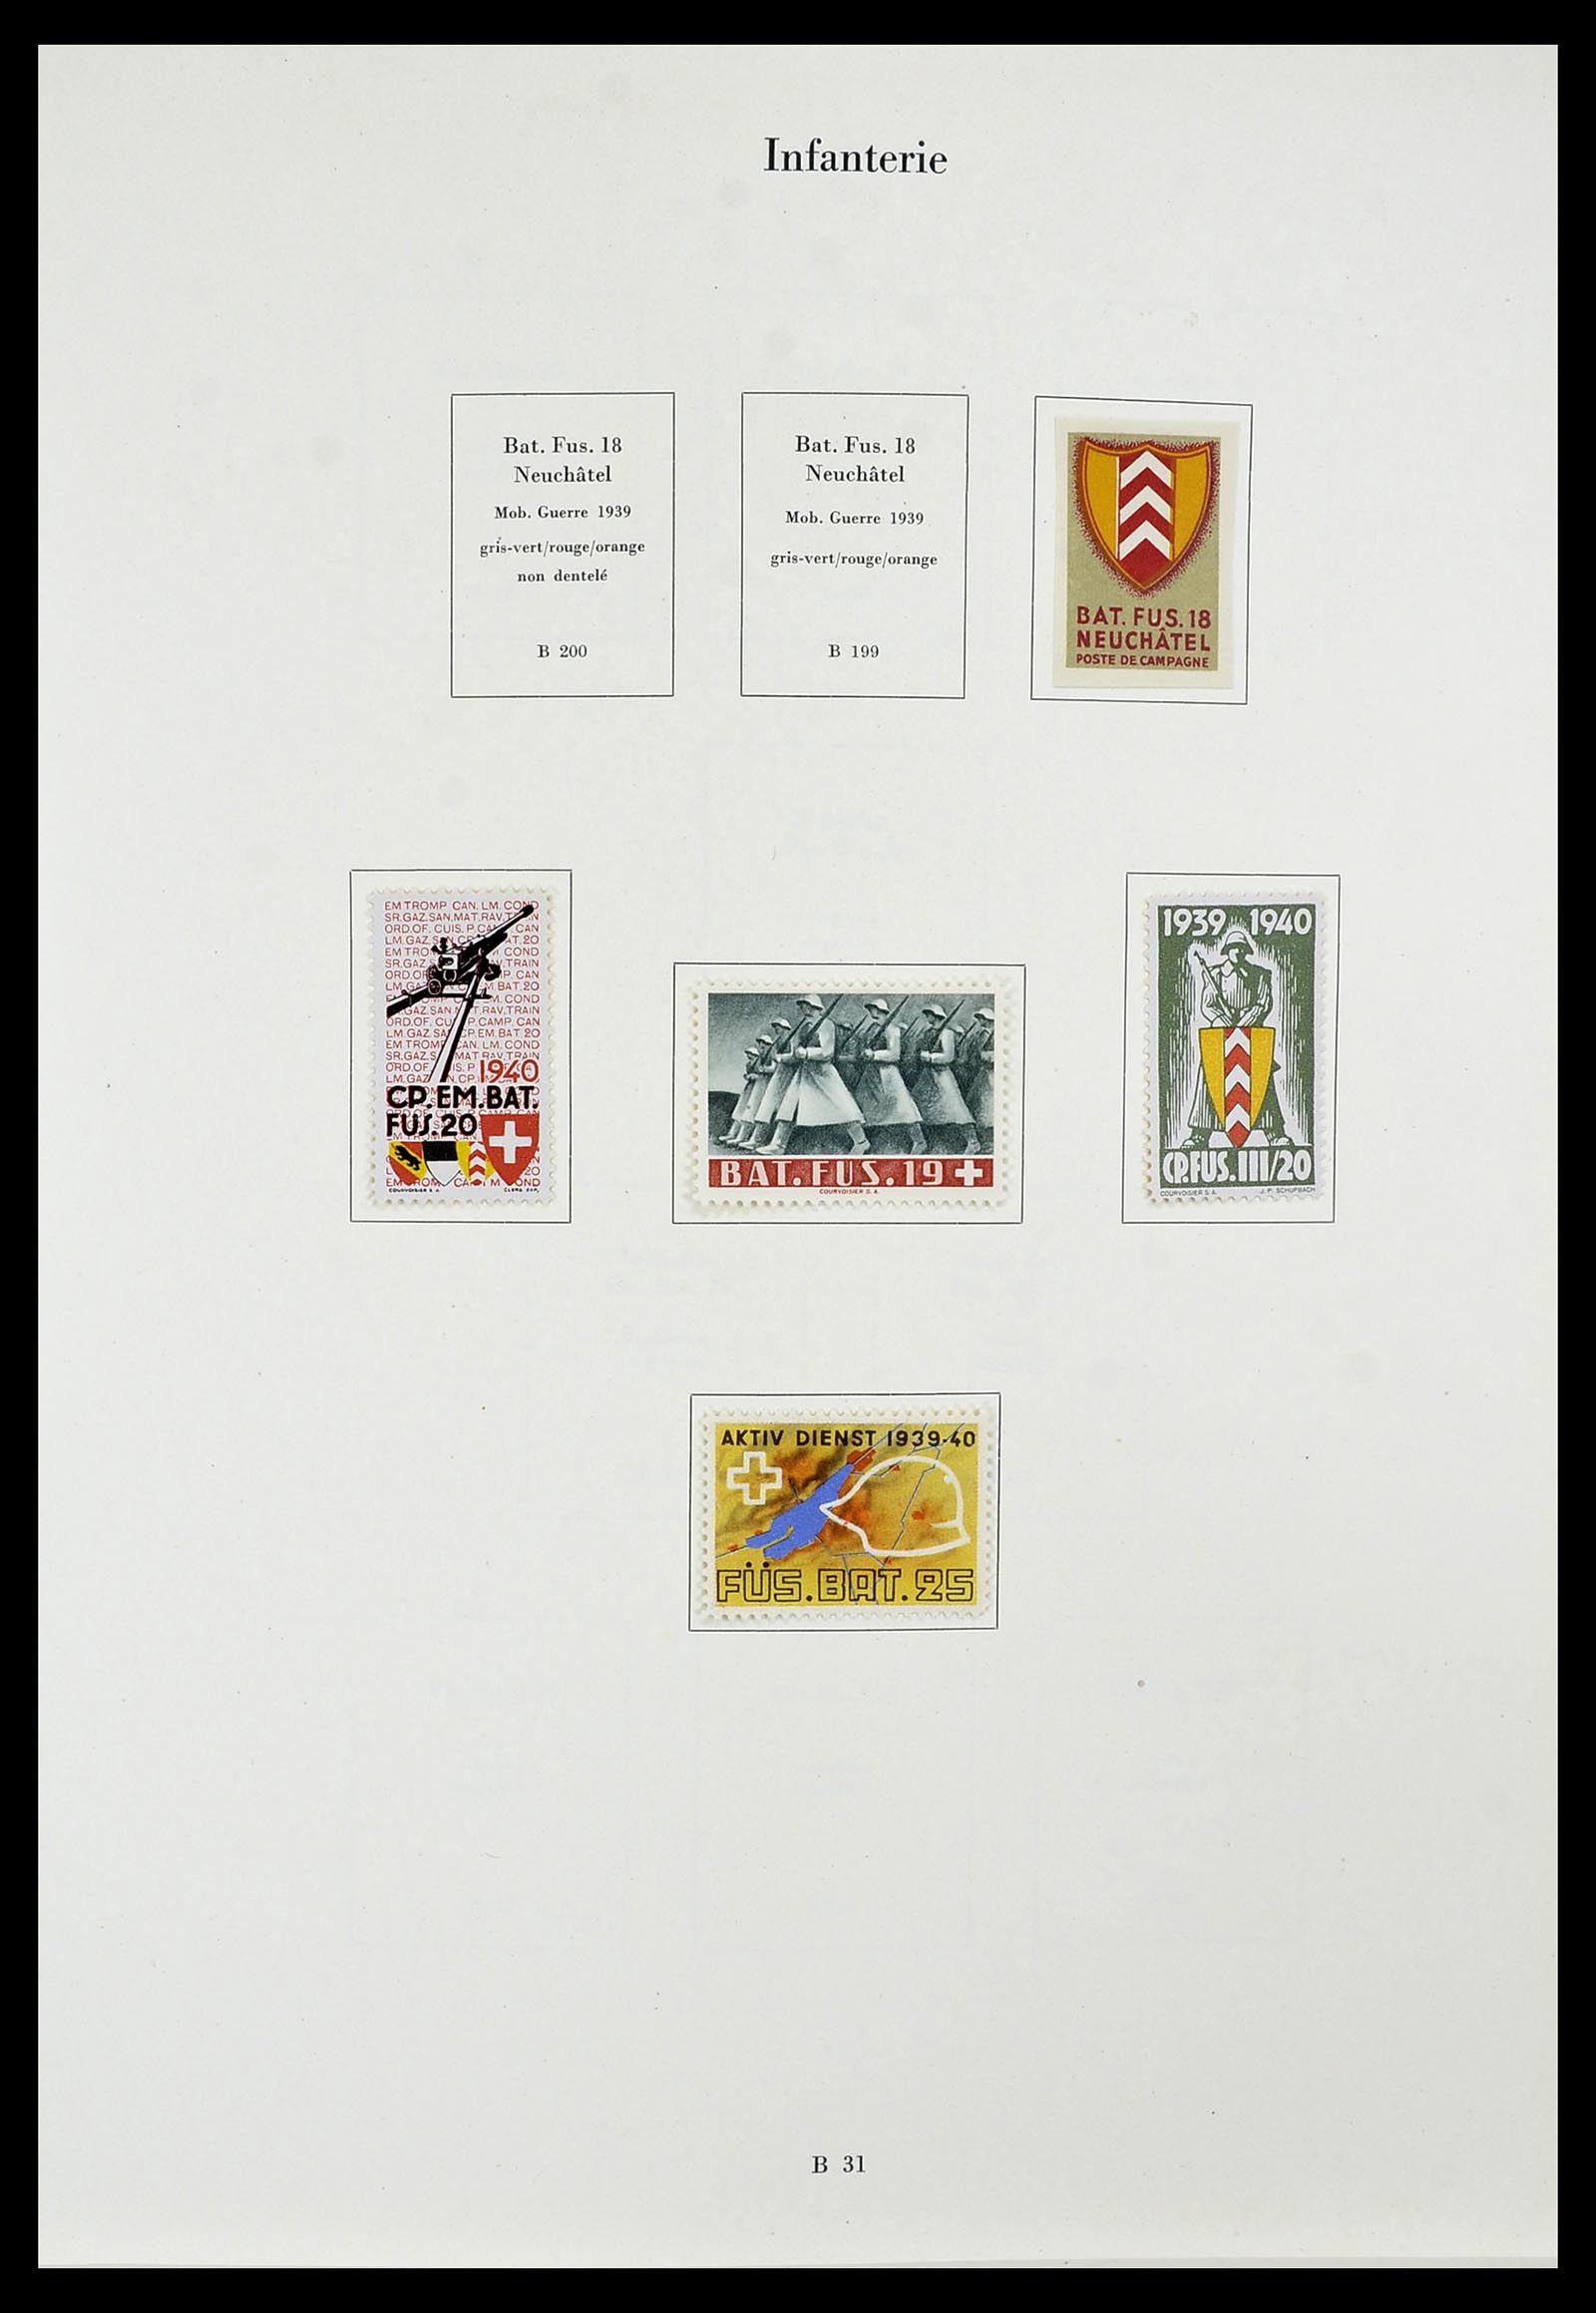 34234 058 - Stamp collection 34234 Switzerland soldier stamps 1939-1945.